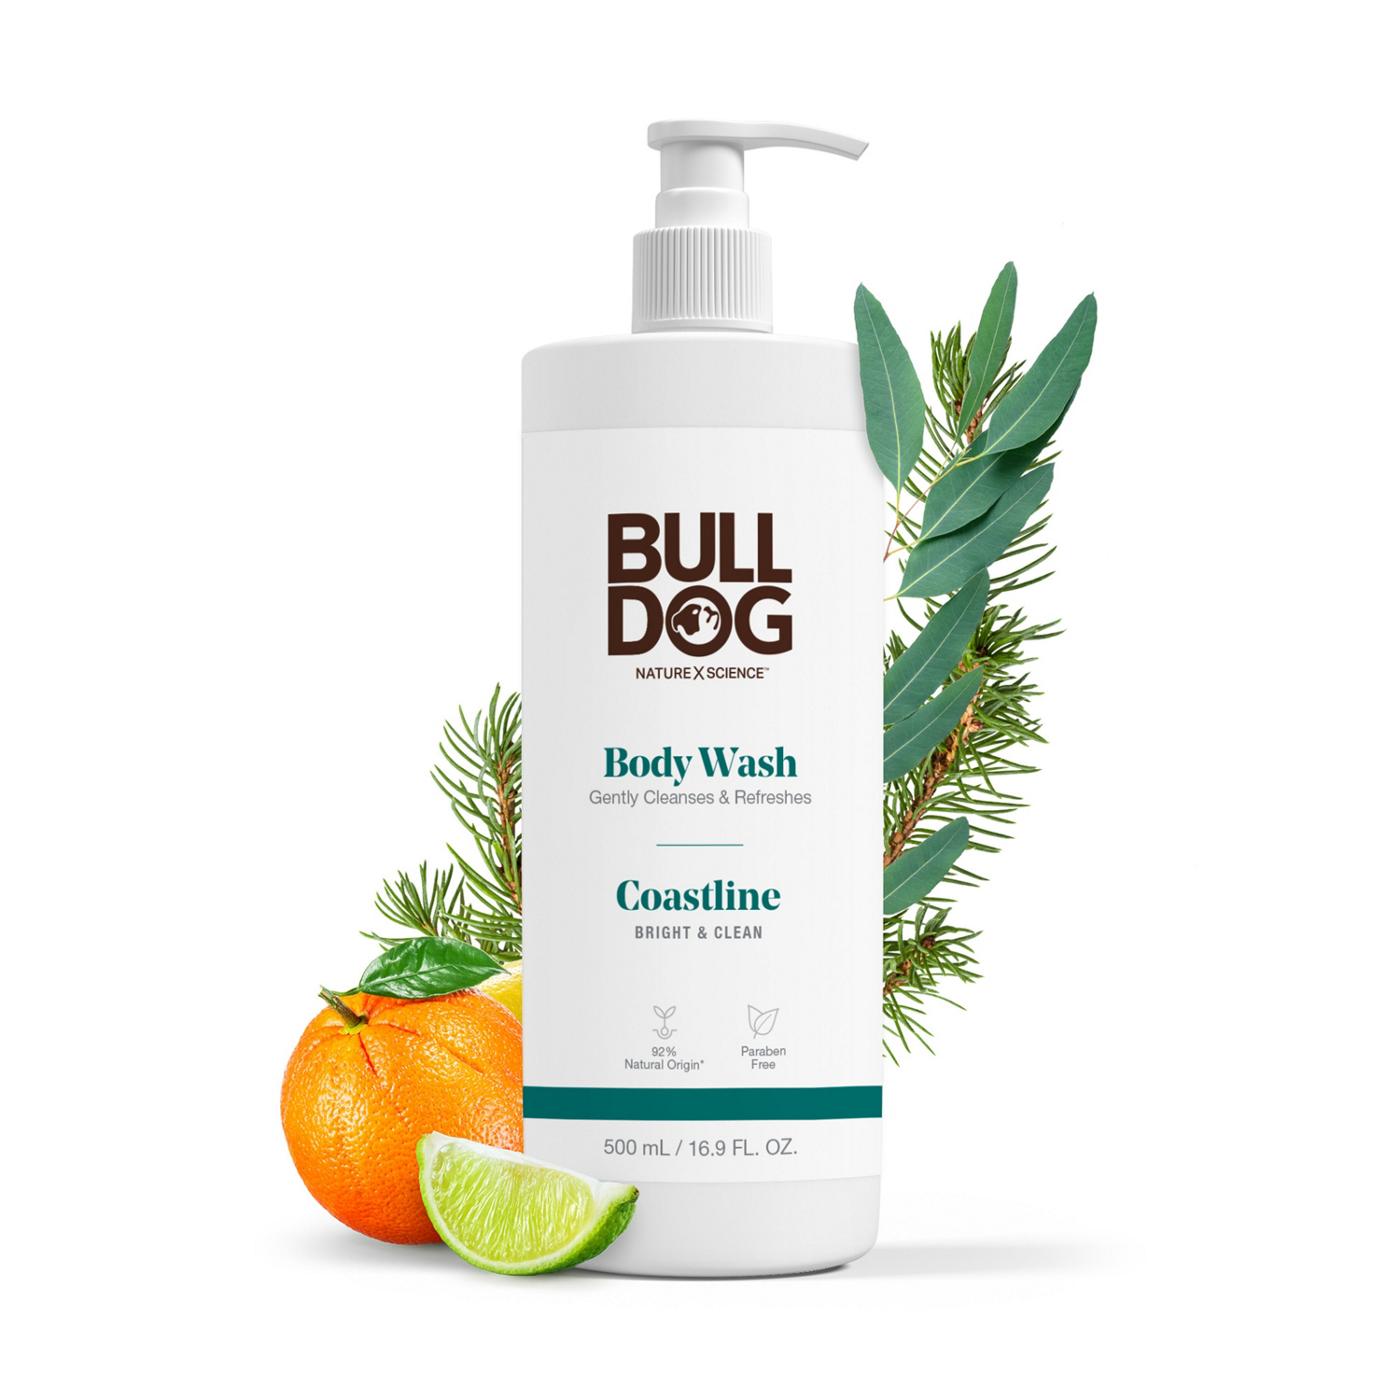 Bulldog Body Wash - Bright & Clean Coastline; image 6 of 7